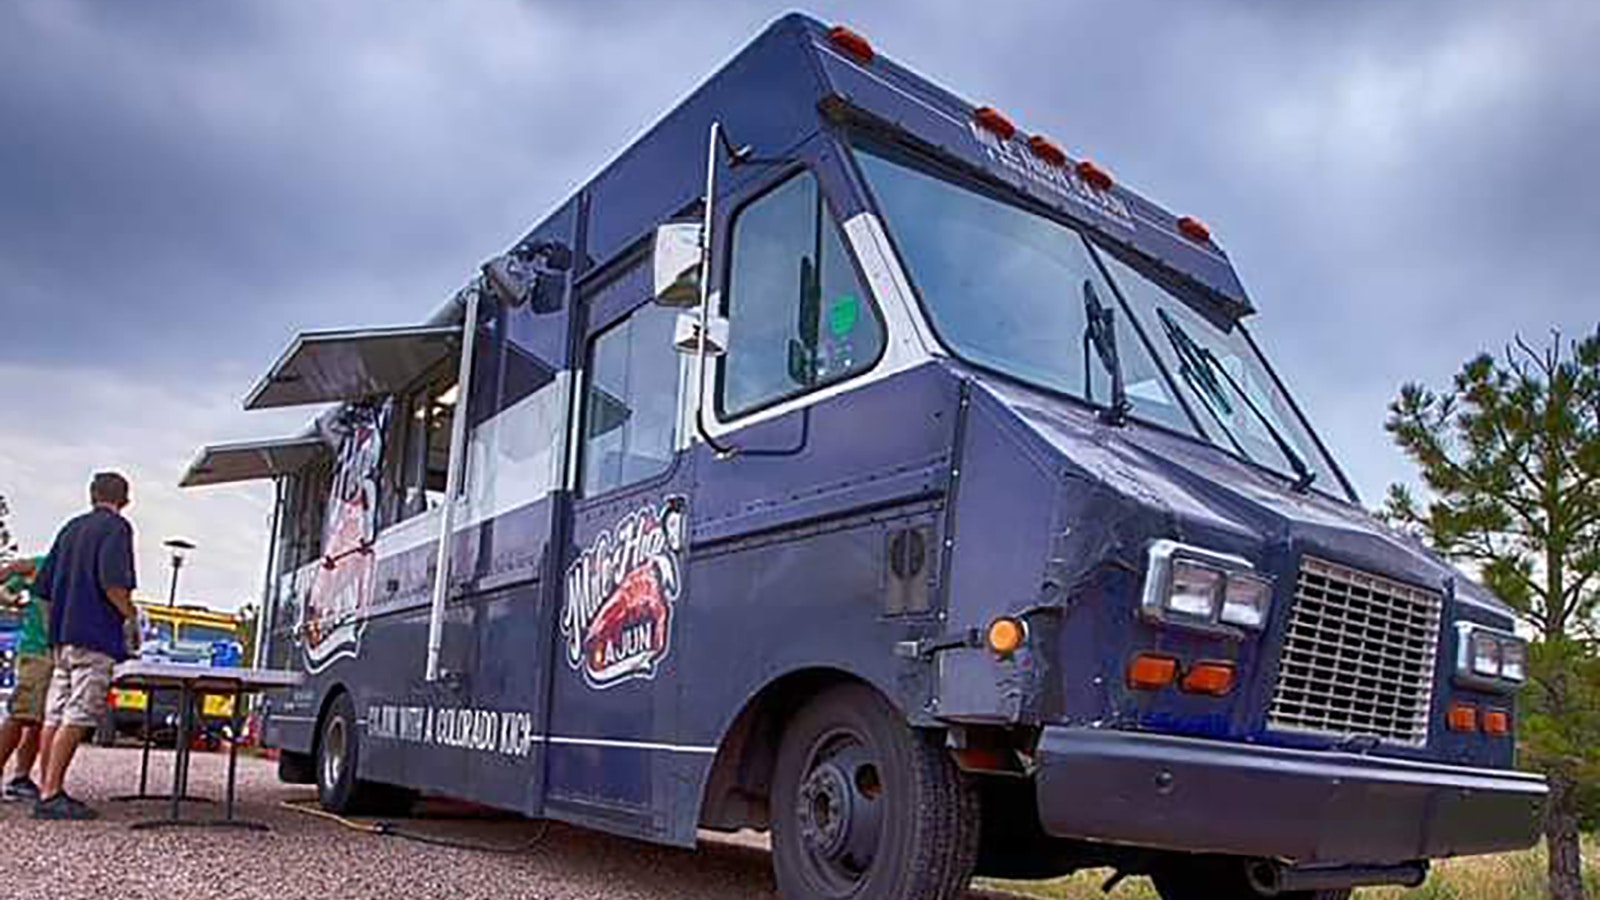 Mile High Cajun food truck located on Highway 89 in Alpine, Wyoming.